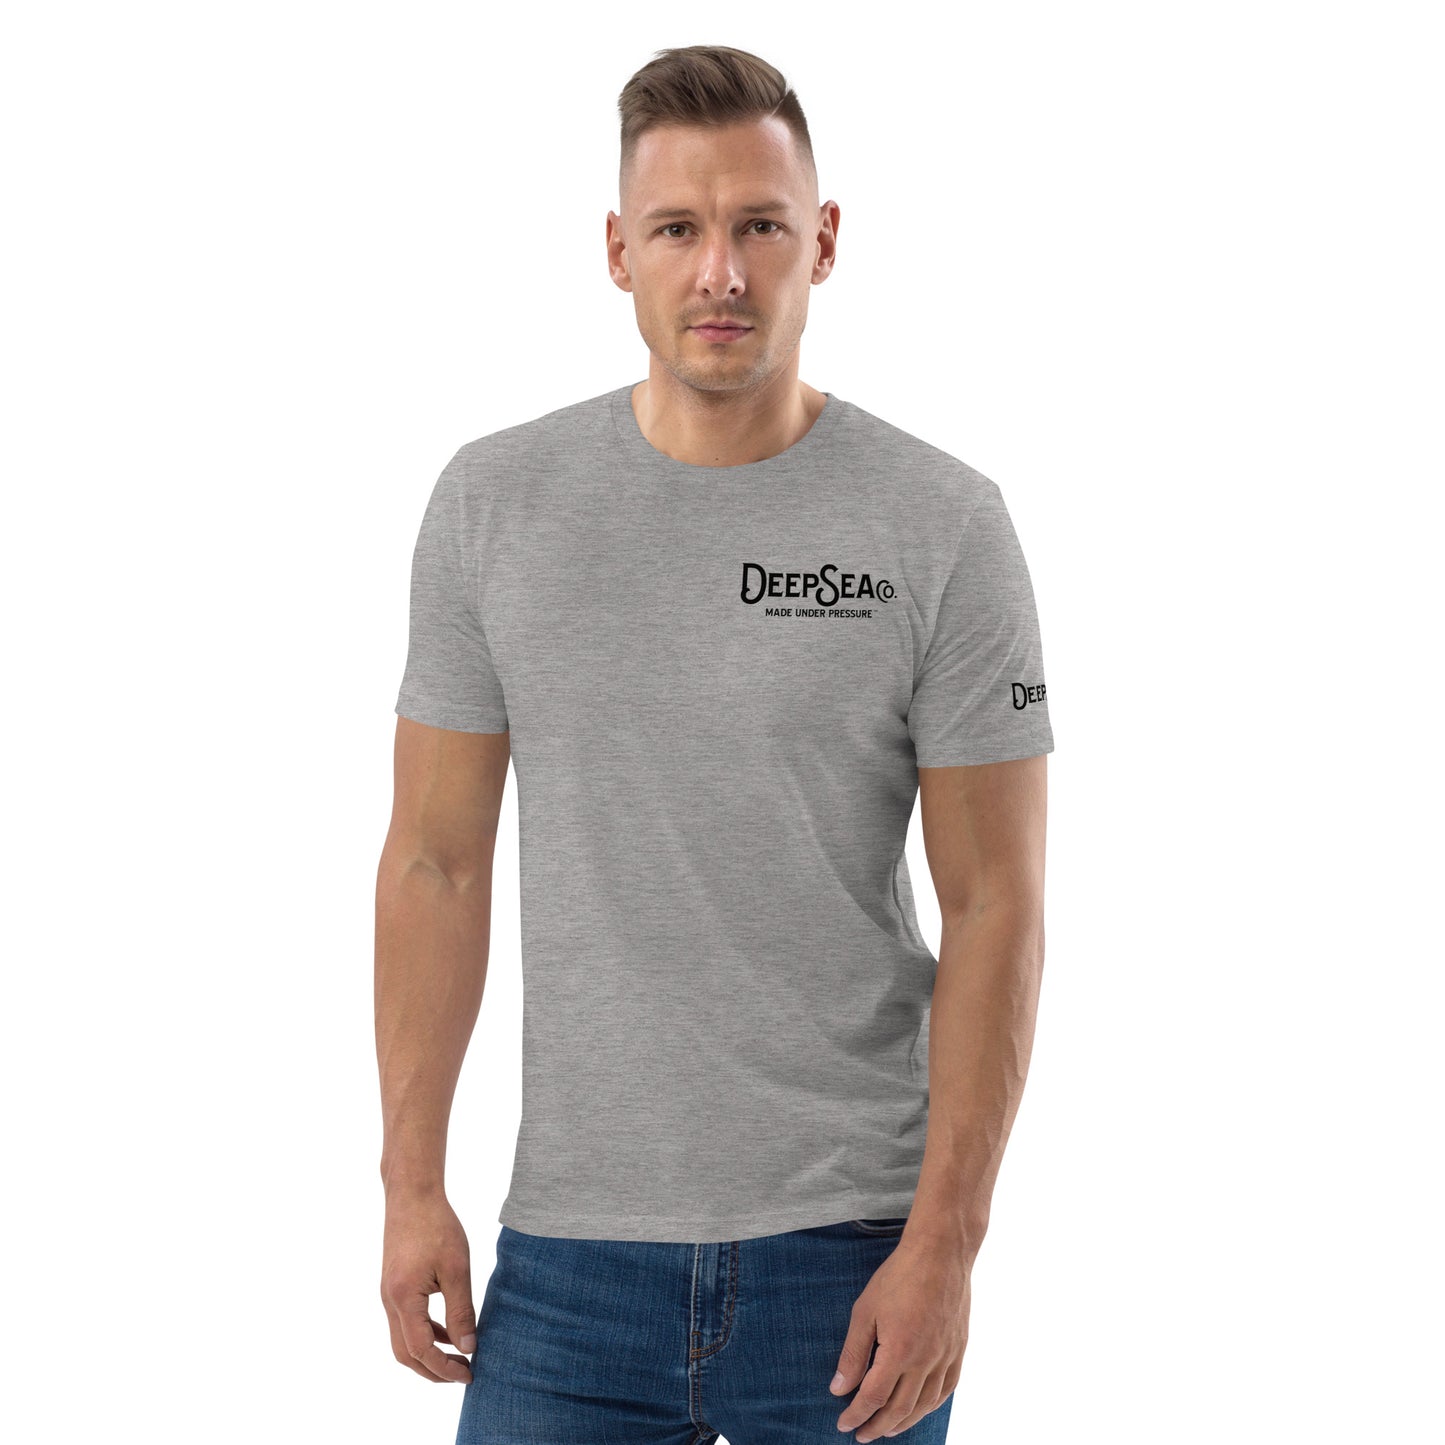 DeepSea Co. Dive Bar Unisex organic cotton t-shirt